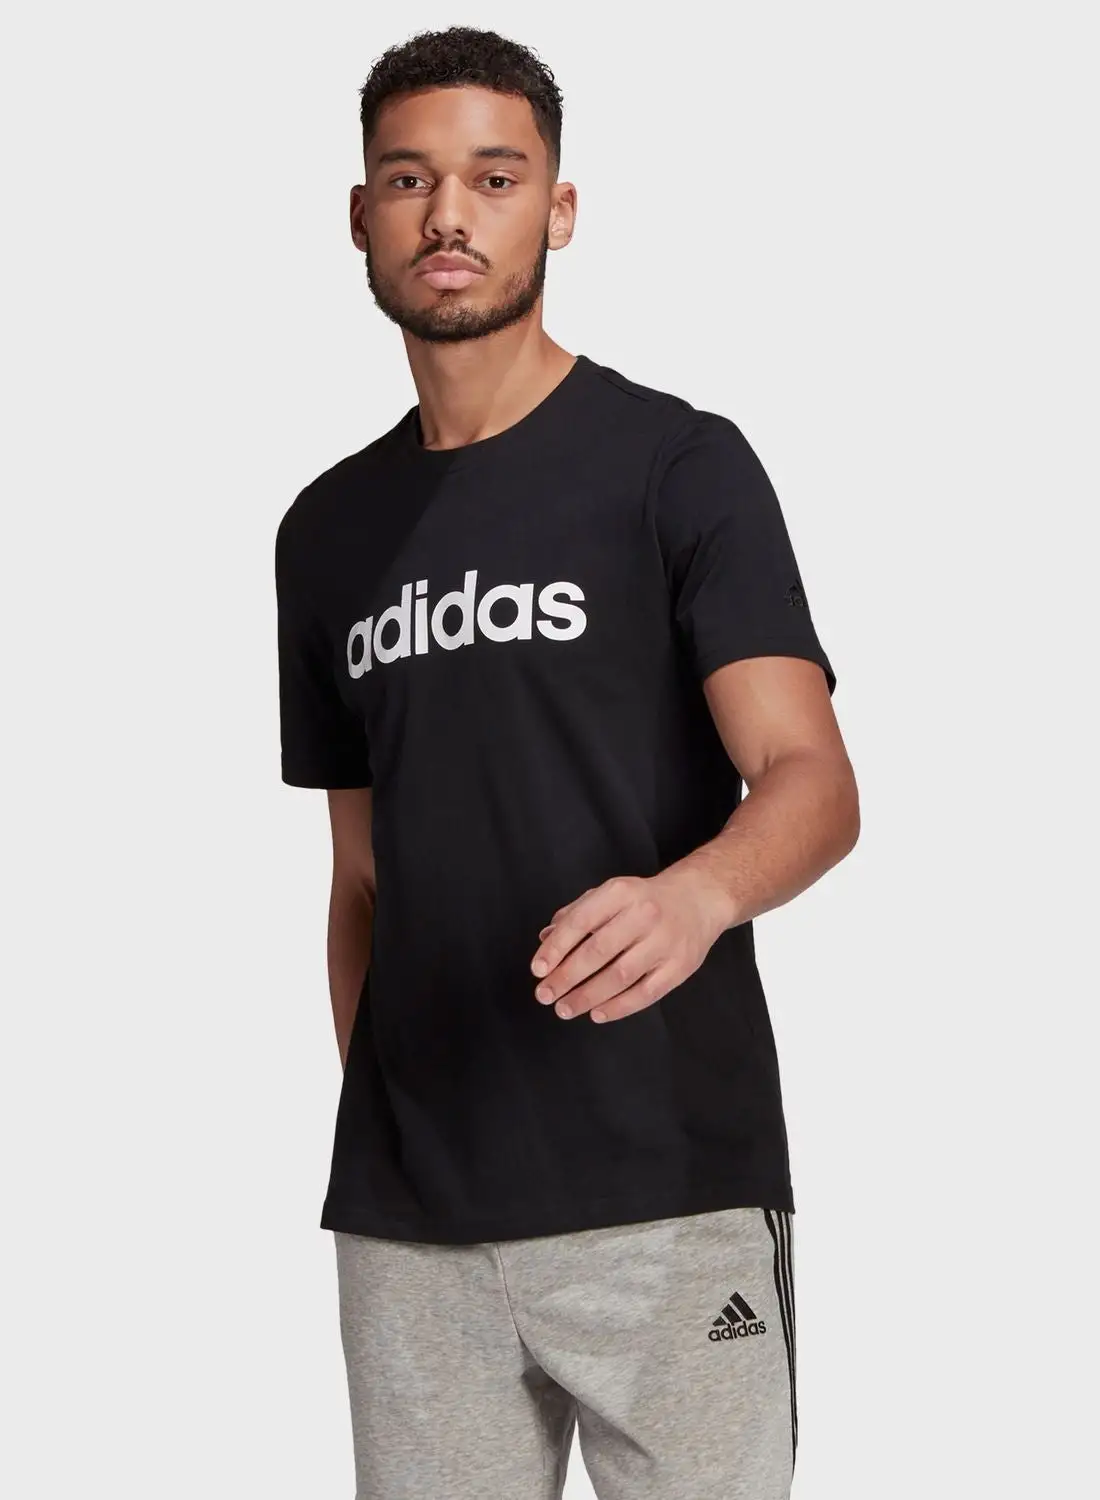 Adidas Linear T-Shirt